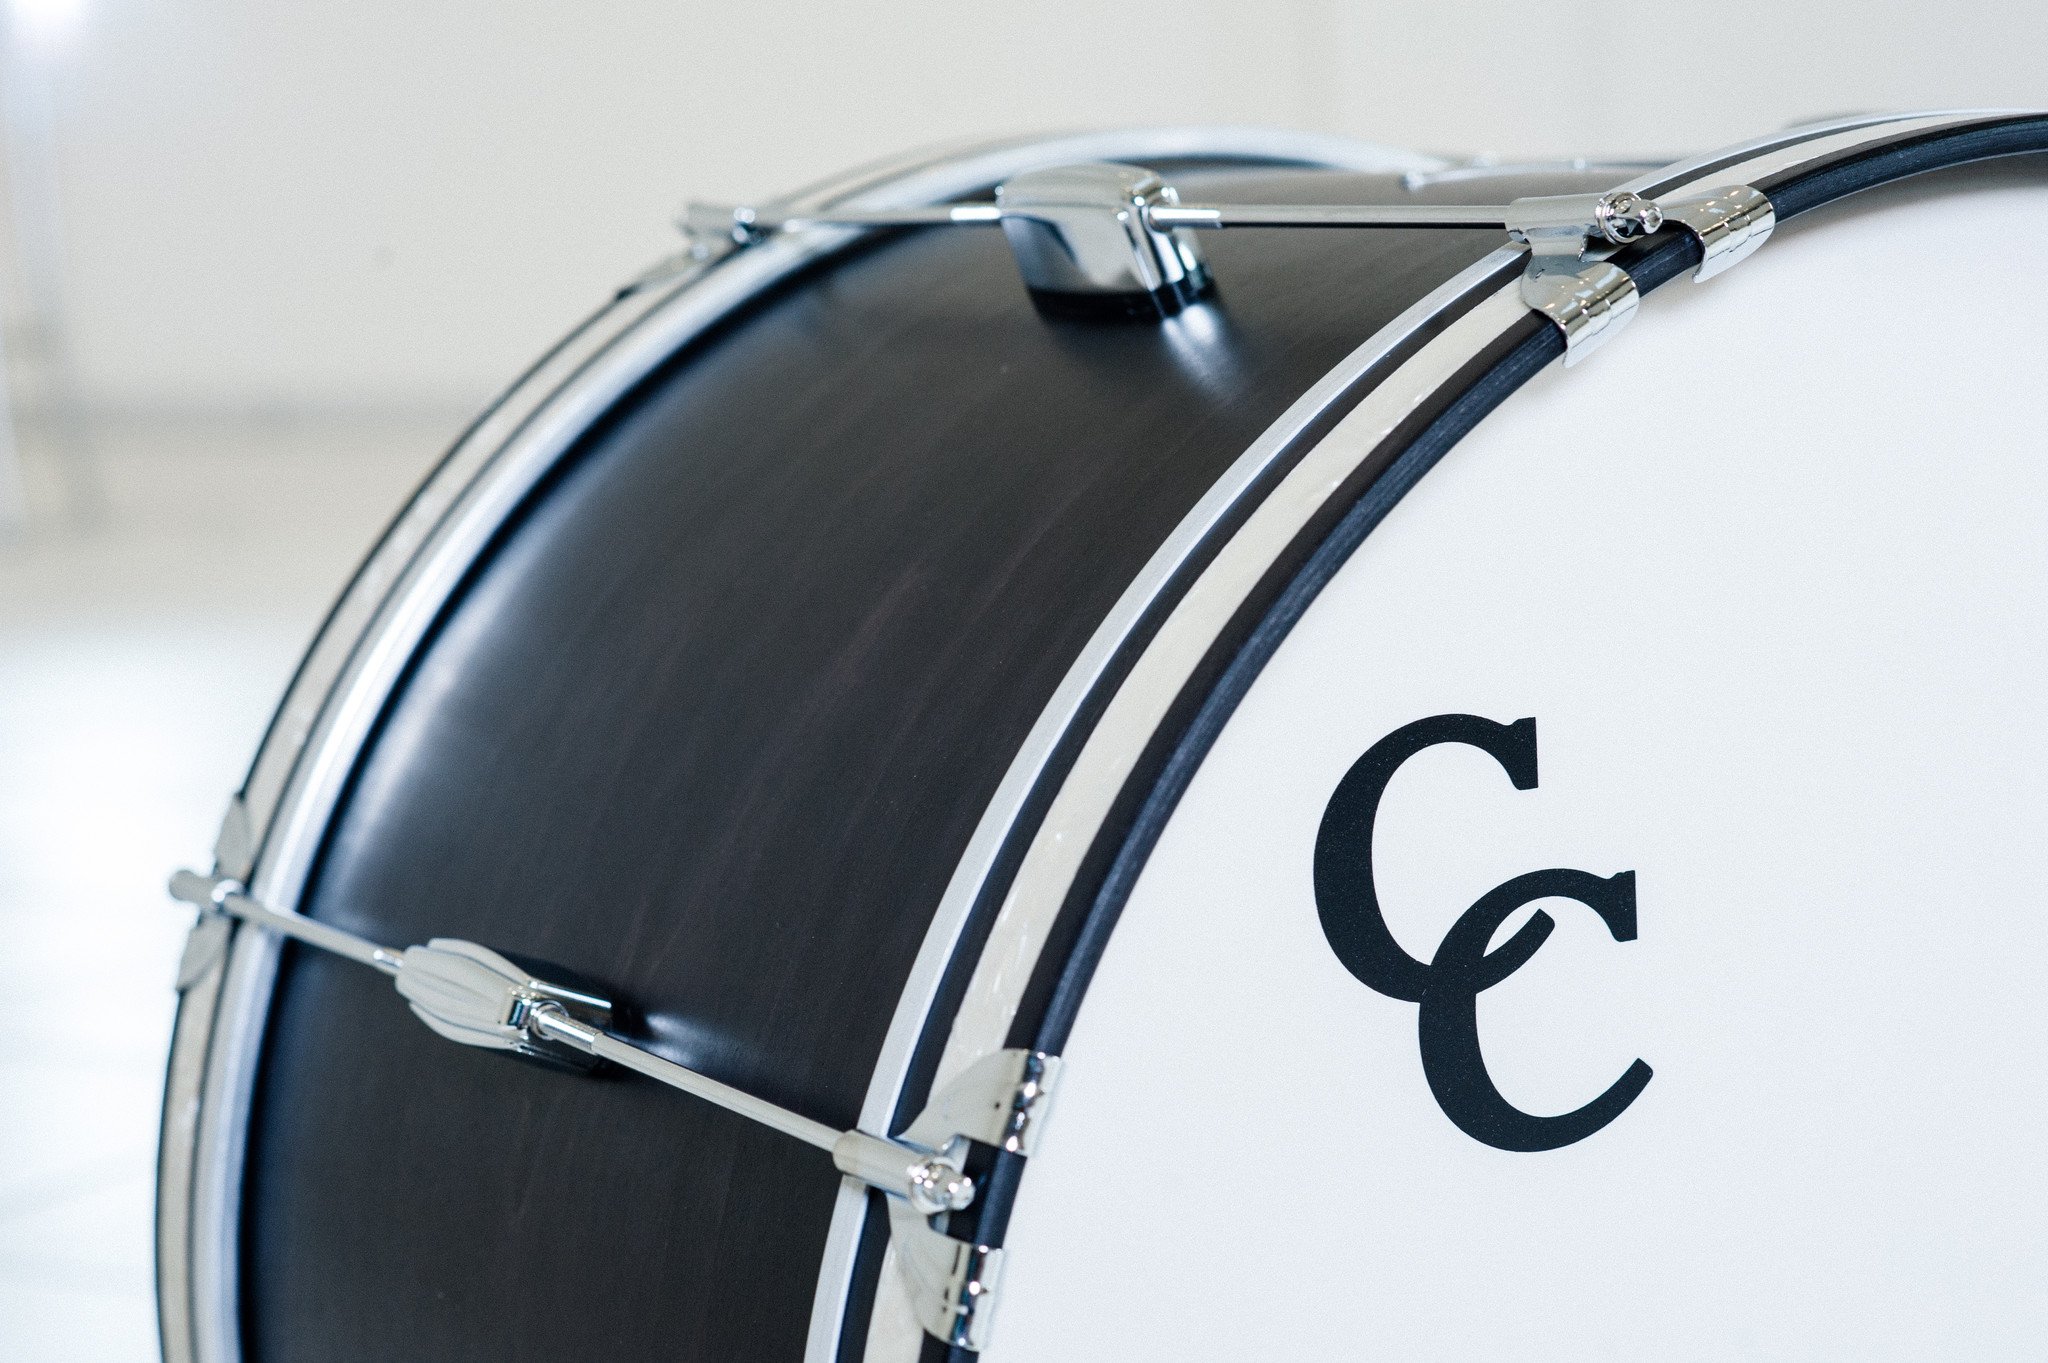 C&C Drums - The New Vintage - Drum Set - Player Date - C&C Drums Europe